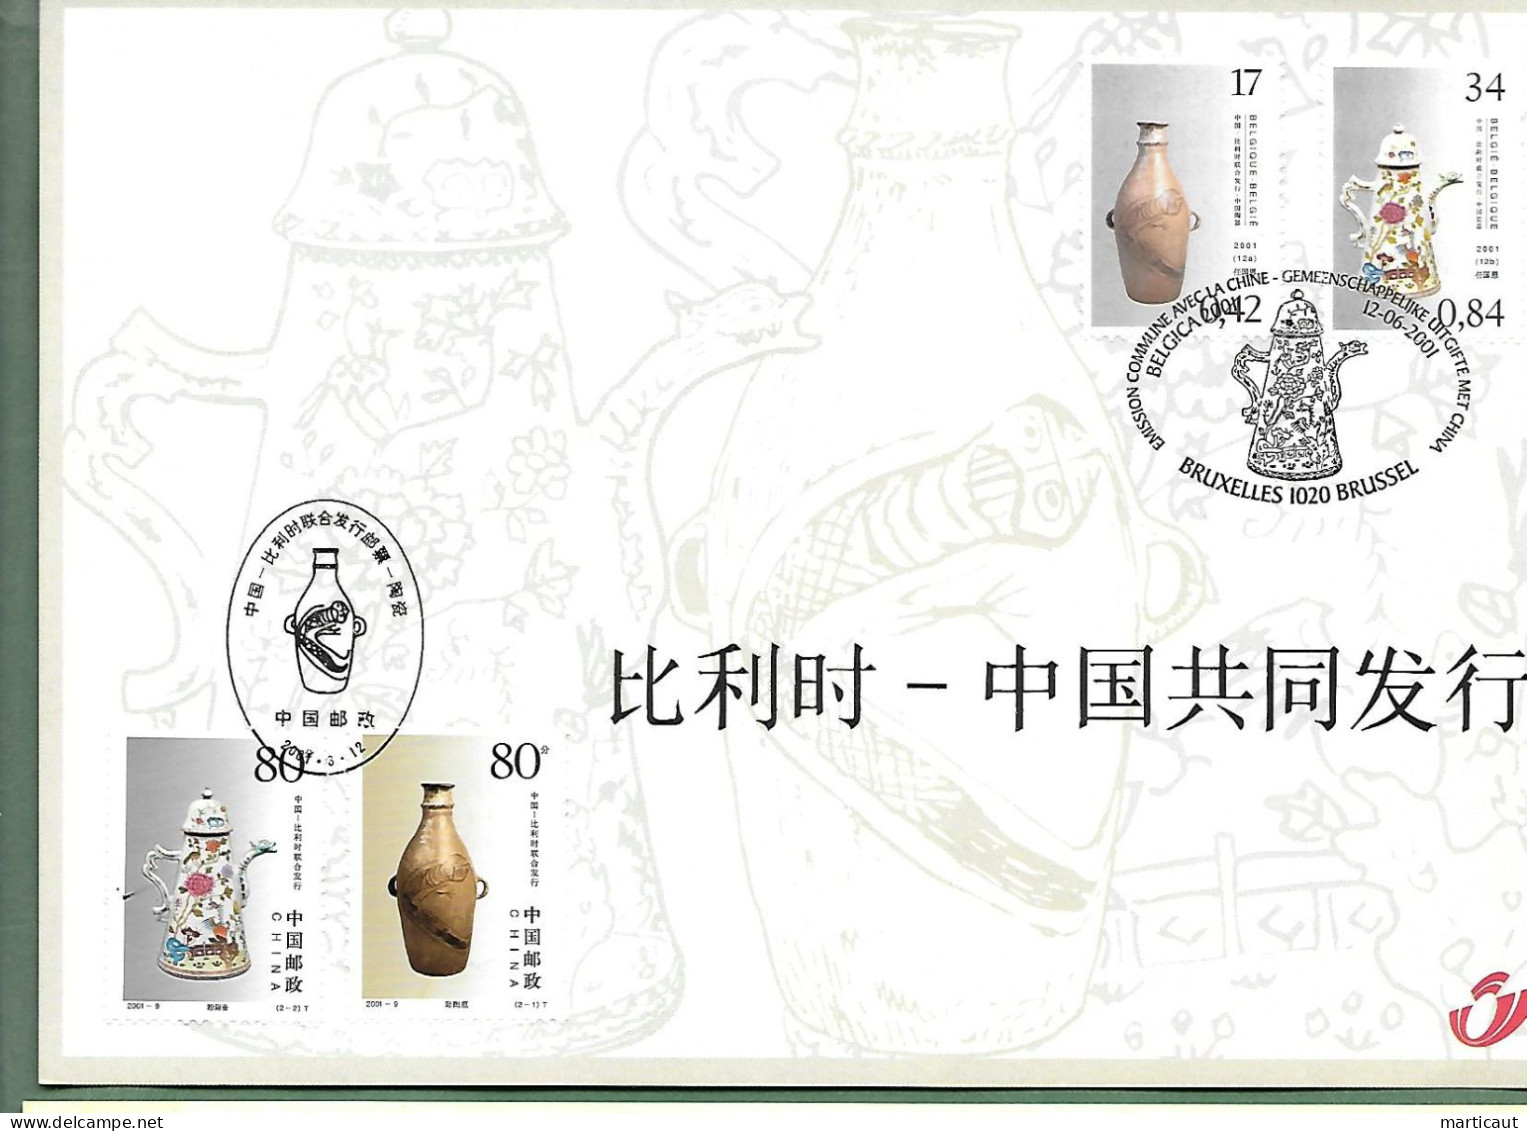 HK 3008 -- Belgique-Chine - Année 2001 - Cartas Commemorativas - Emisiones Comunes [HK]